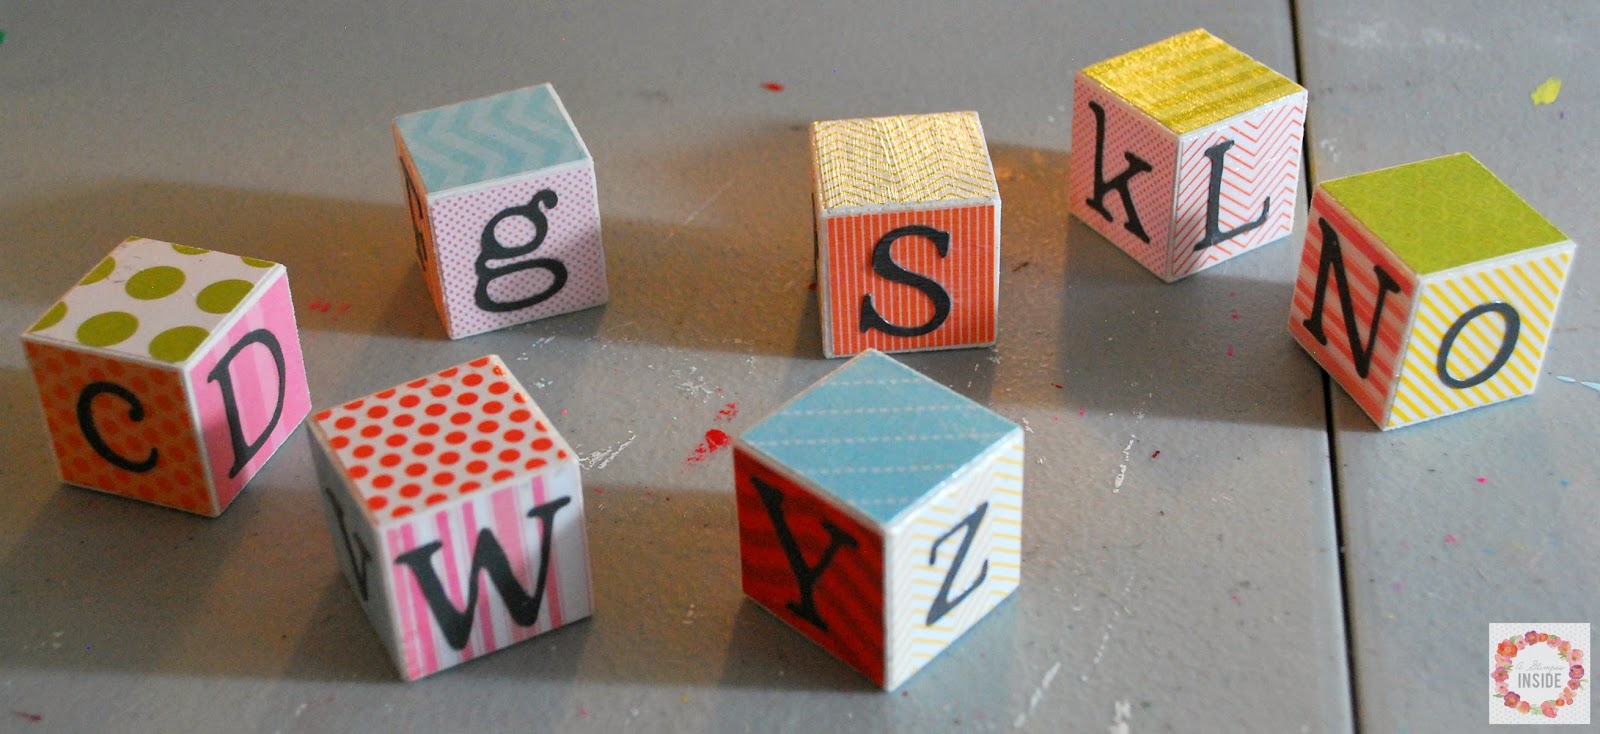 DIY Alphabet Blocks by A Glimpse Inside | Mabey She Made It | # DIY  #alphabet #school #blocks